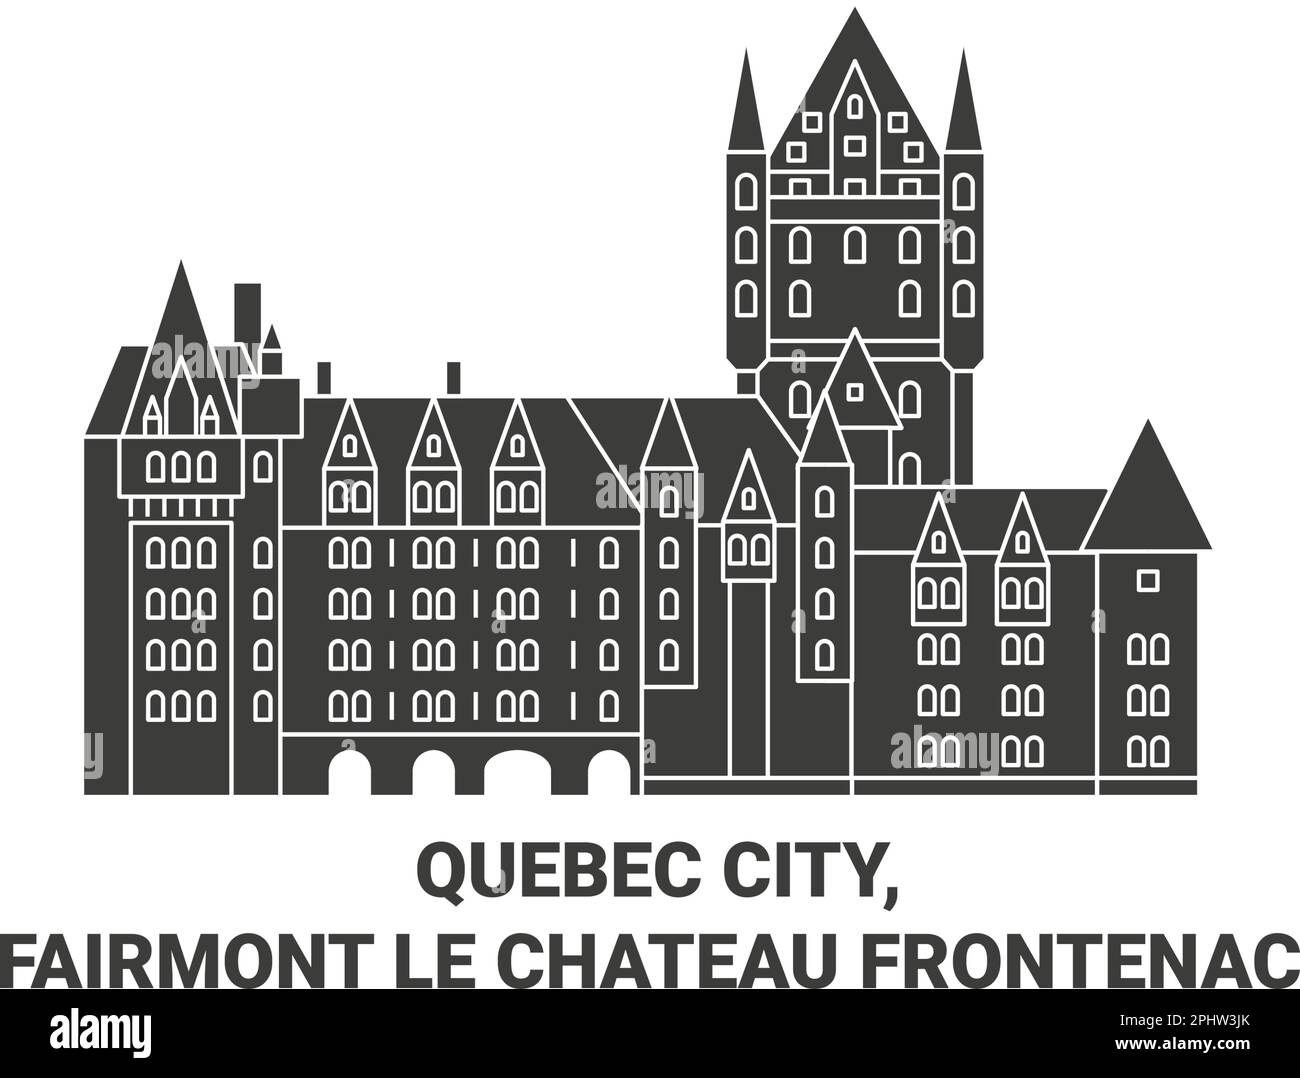 Canada, Quebec City, Fairmont Le Chateau Frontenac travel landmark vector illustration Stock Vector